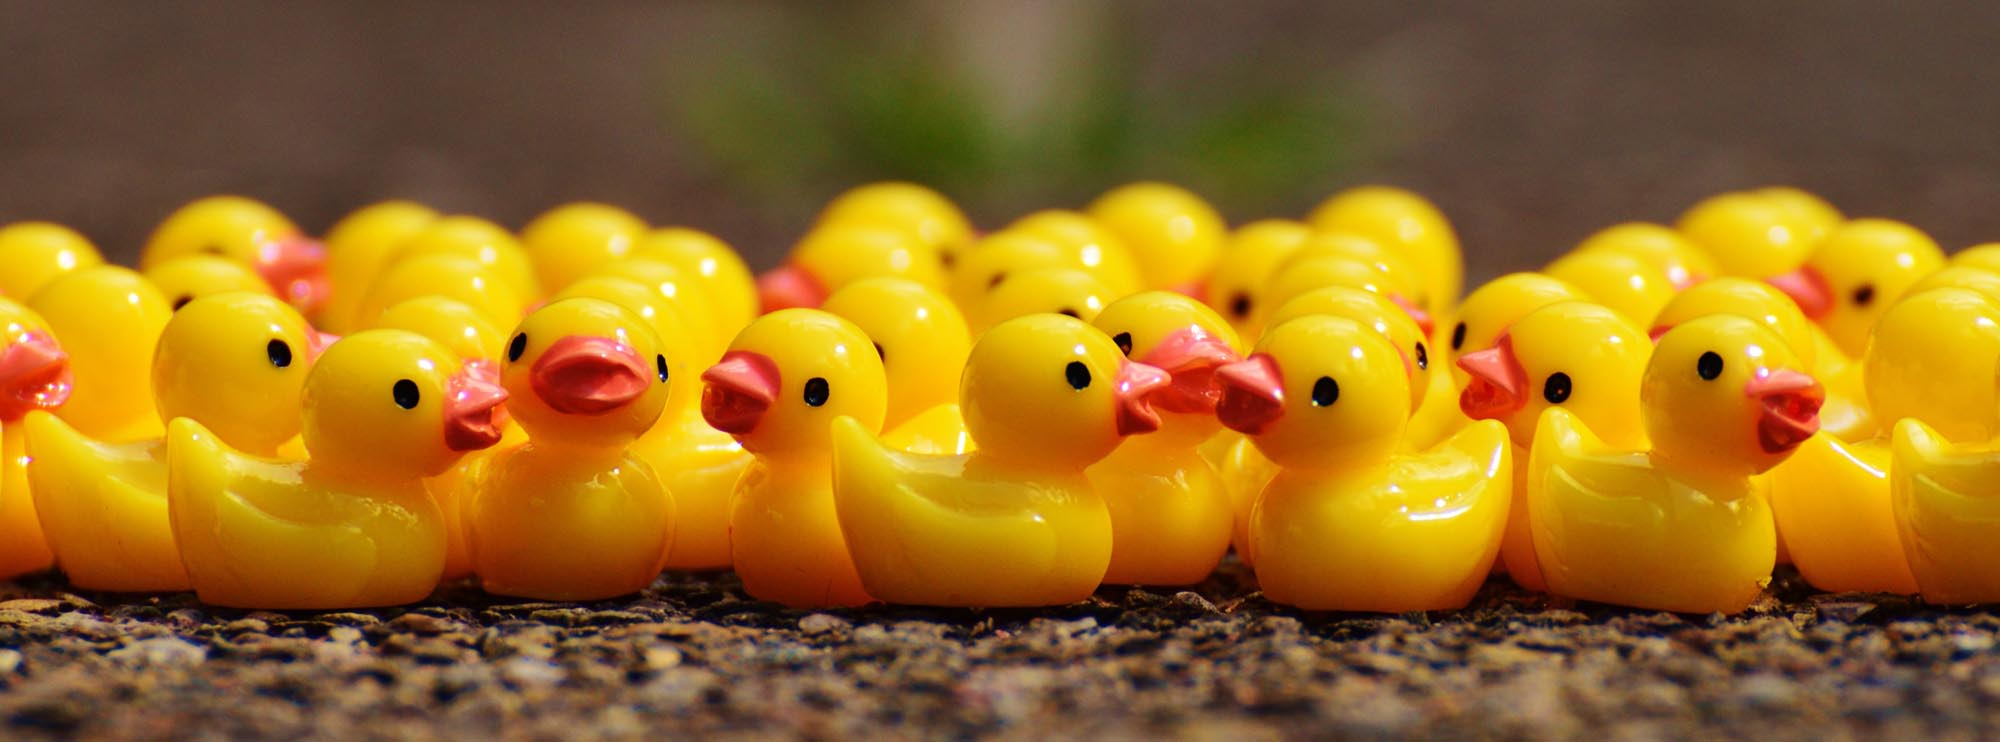 Plastic ducks in a row